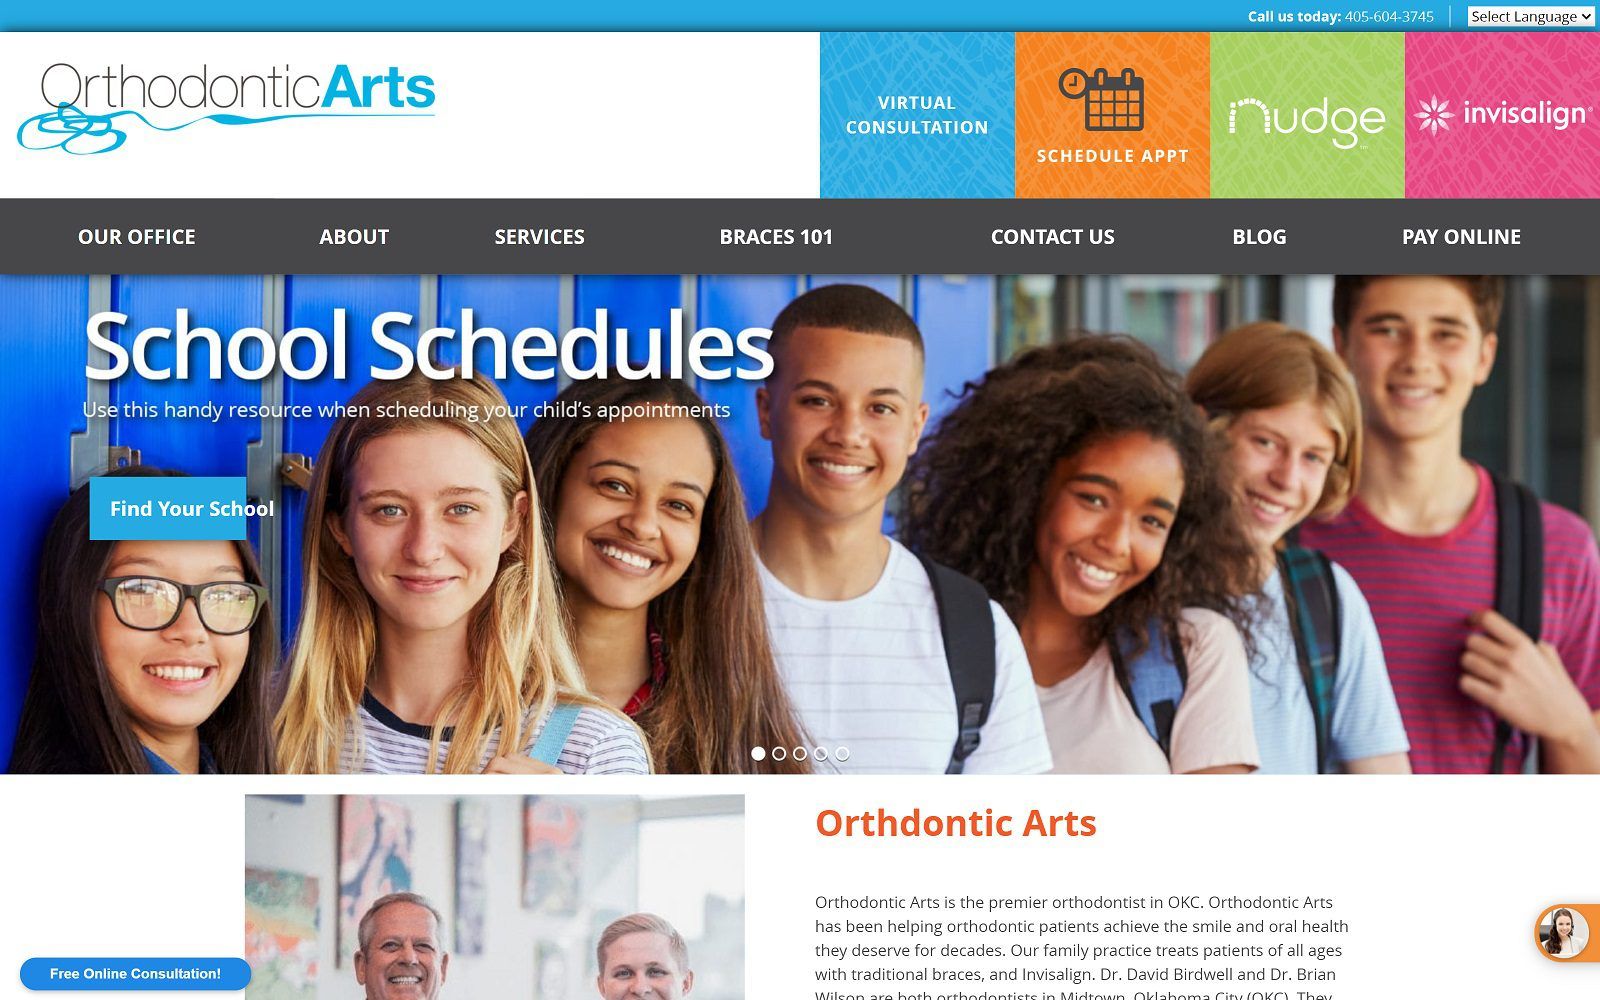 The screenshot of orthodontic arts website